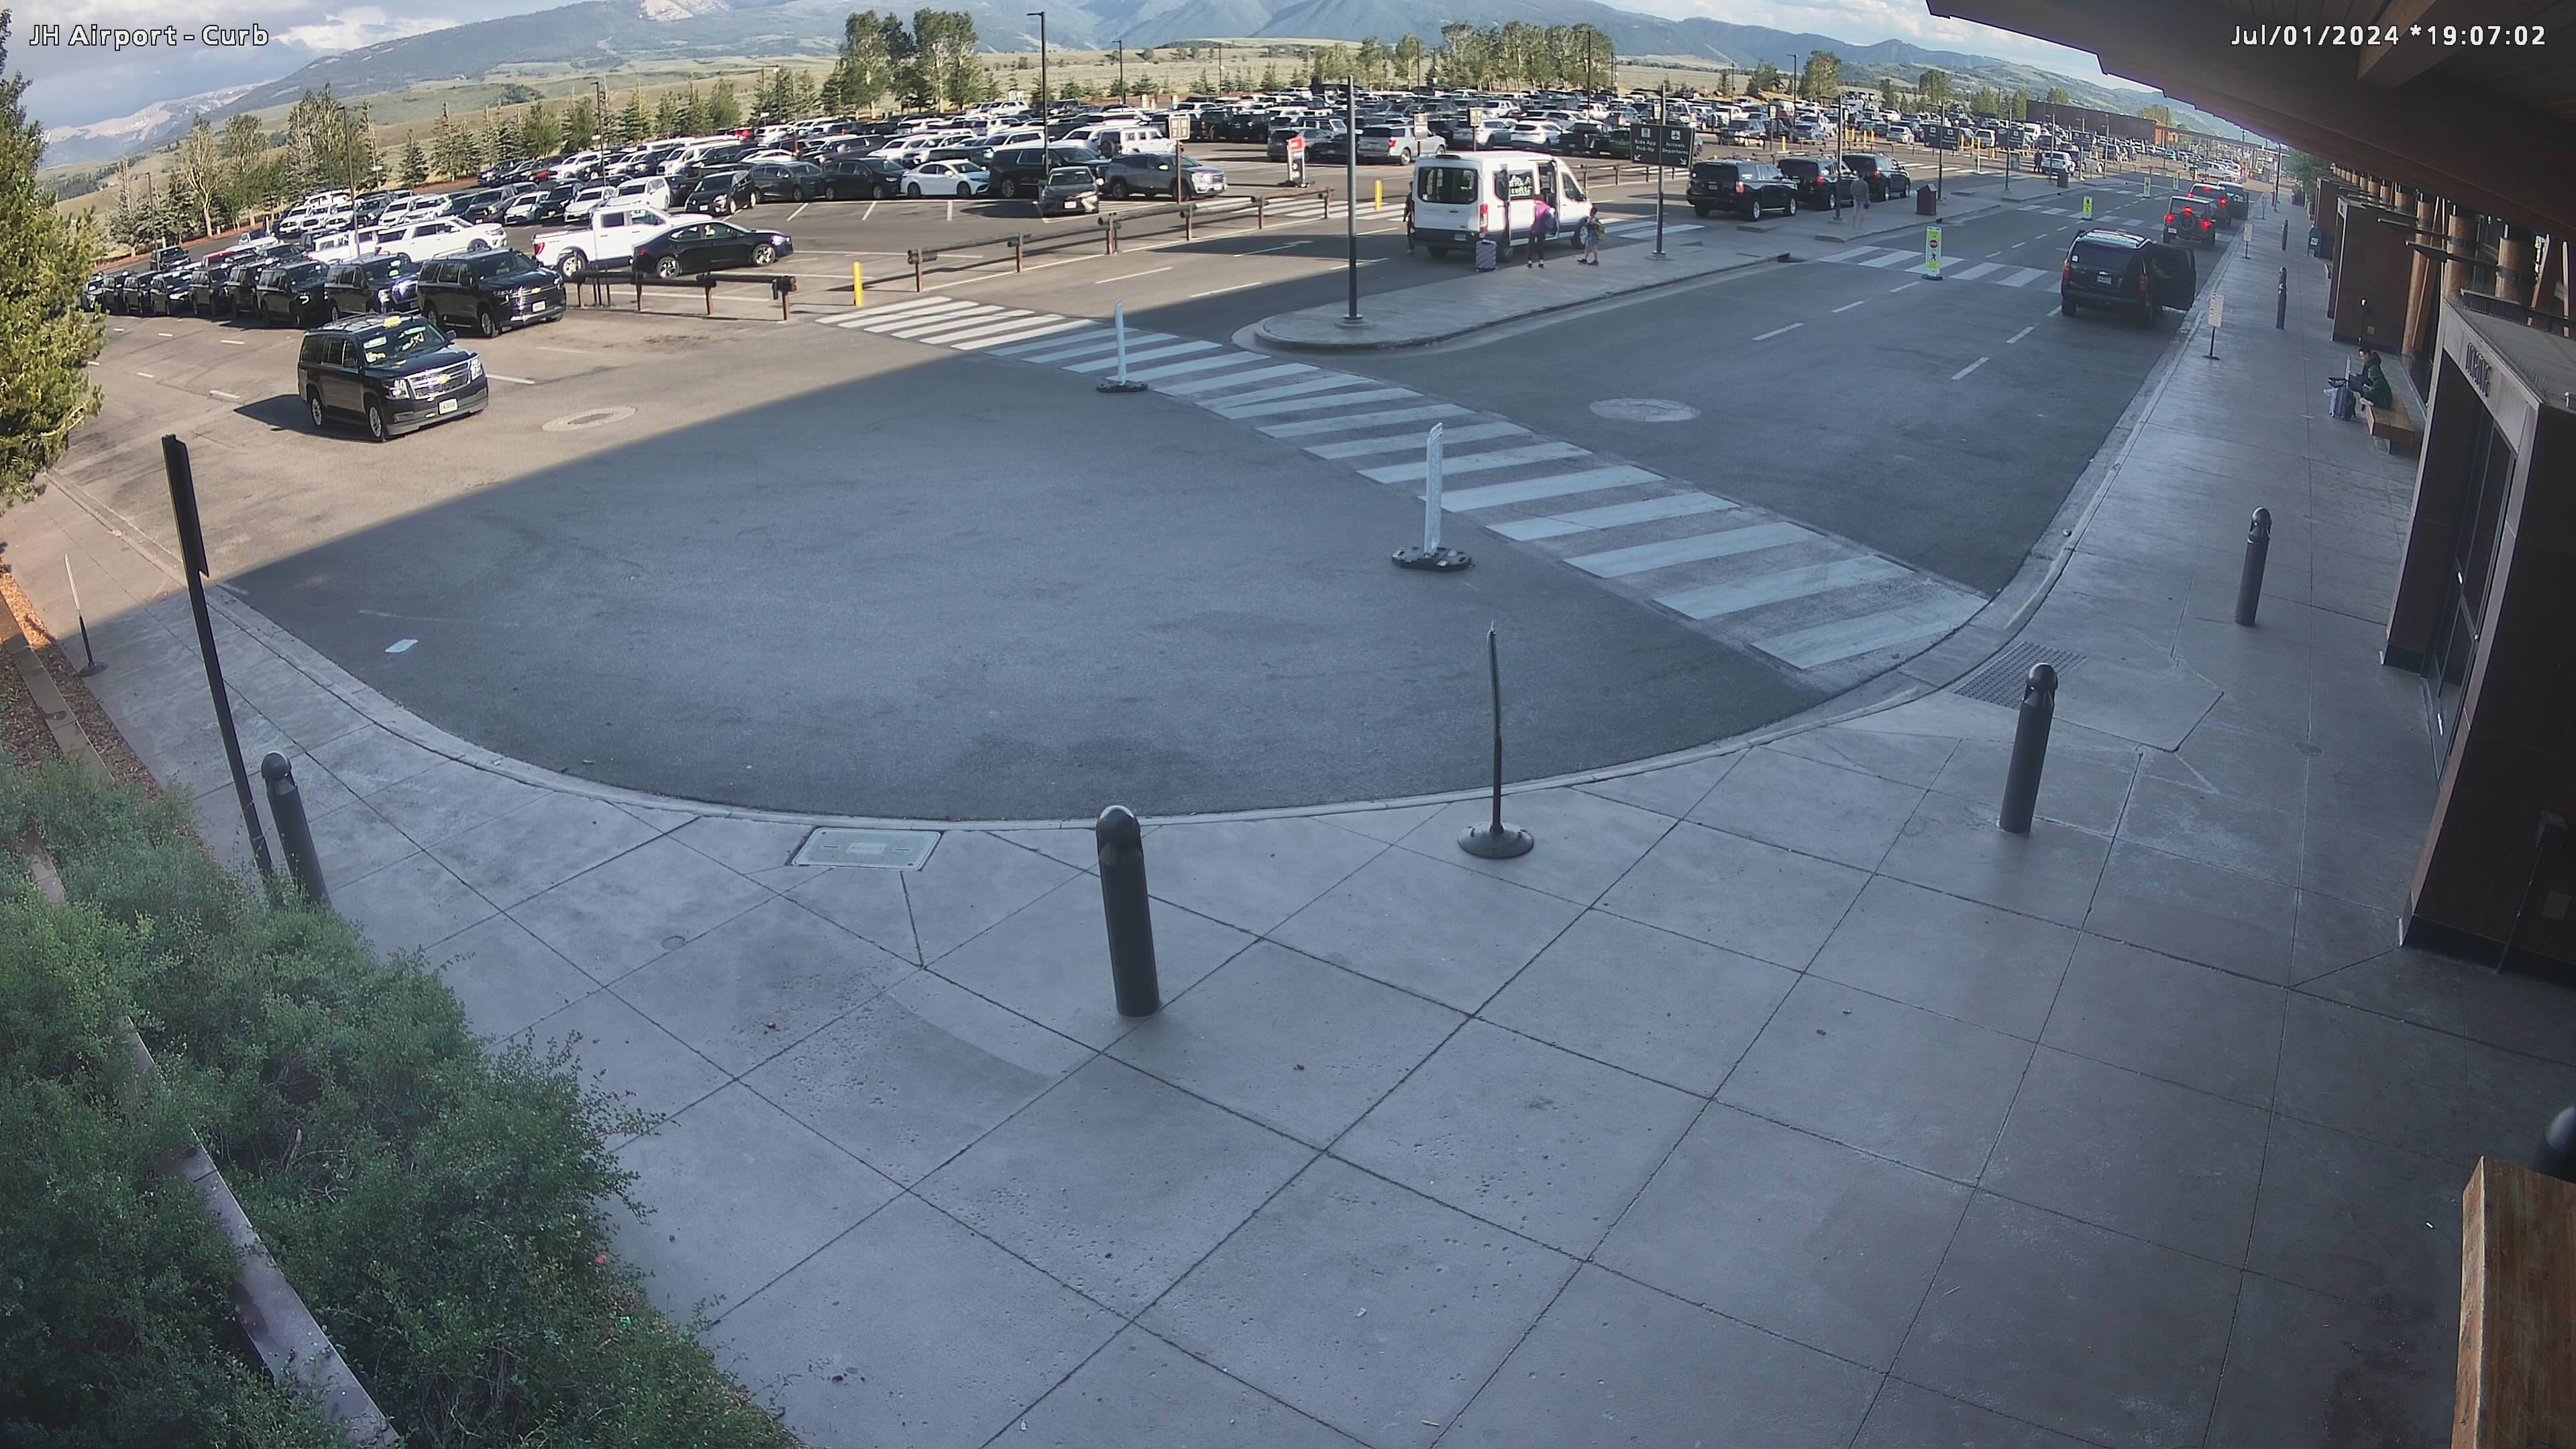 Jackson Hole Airport Webcam - Curb Pickup Area